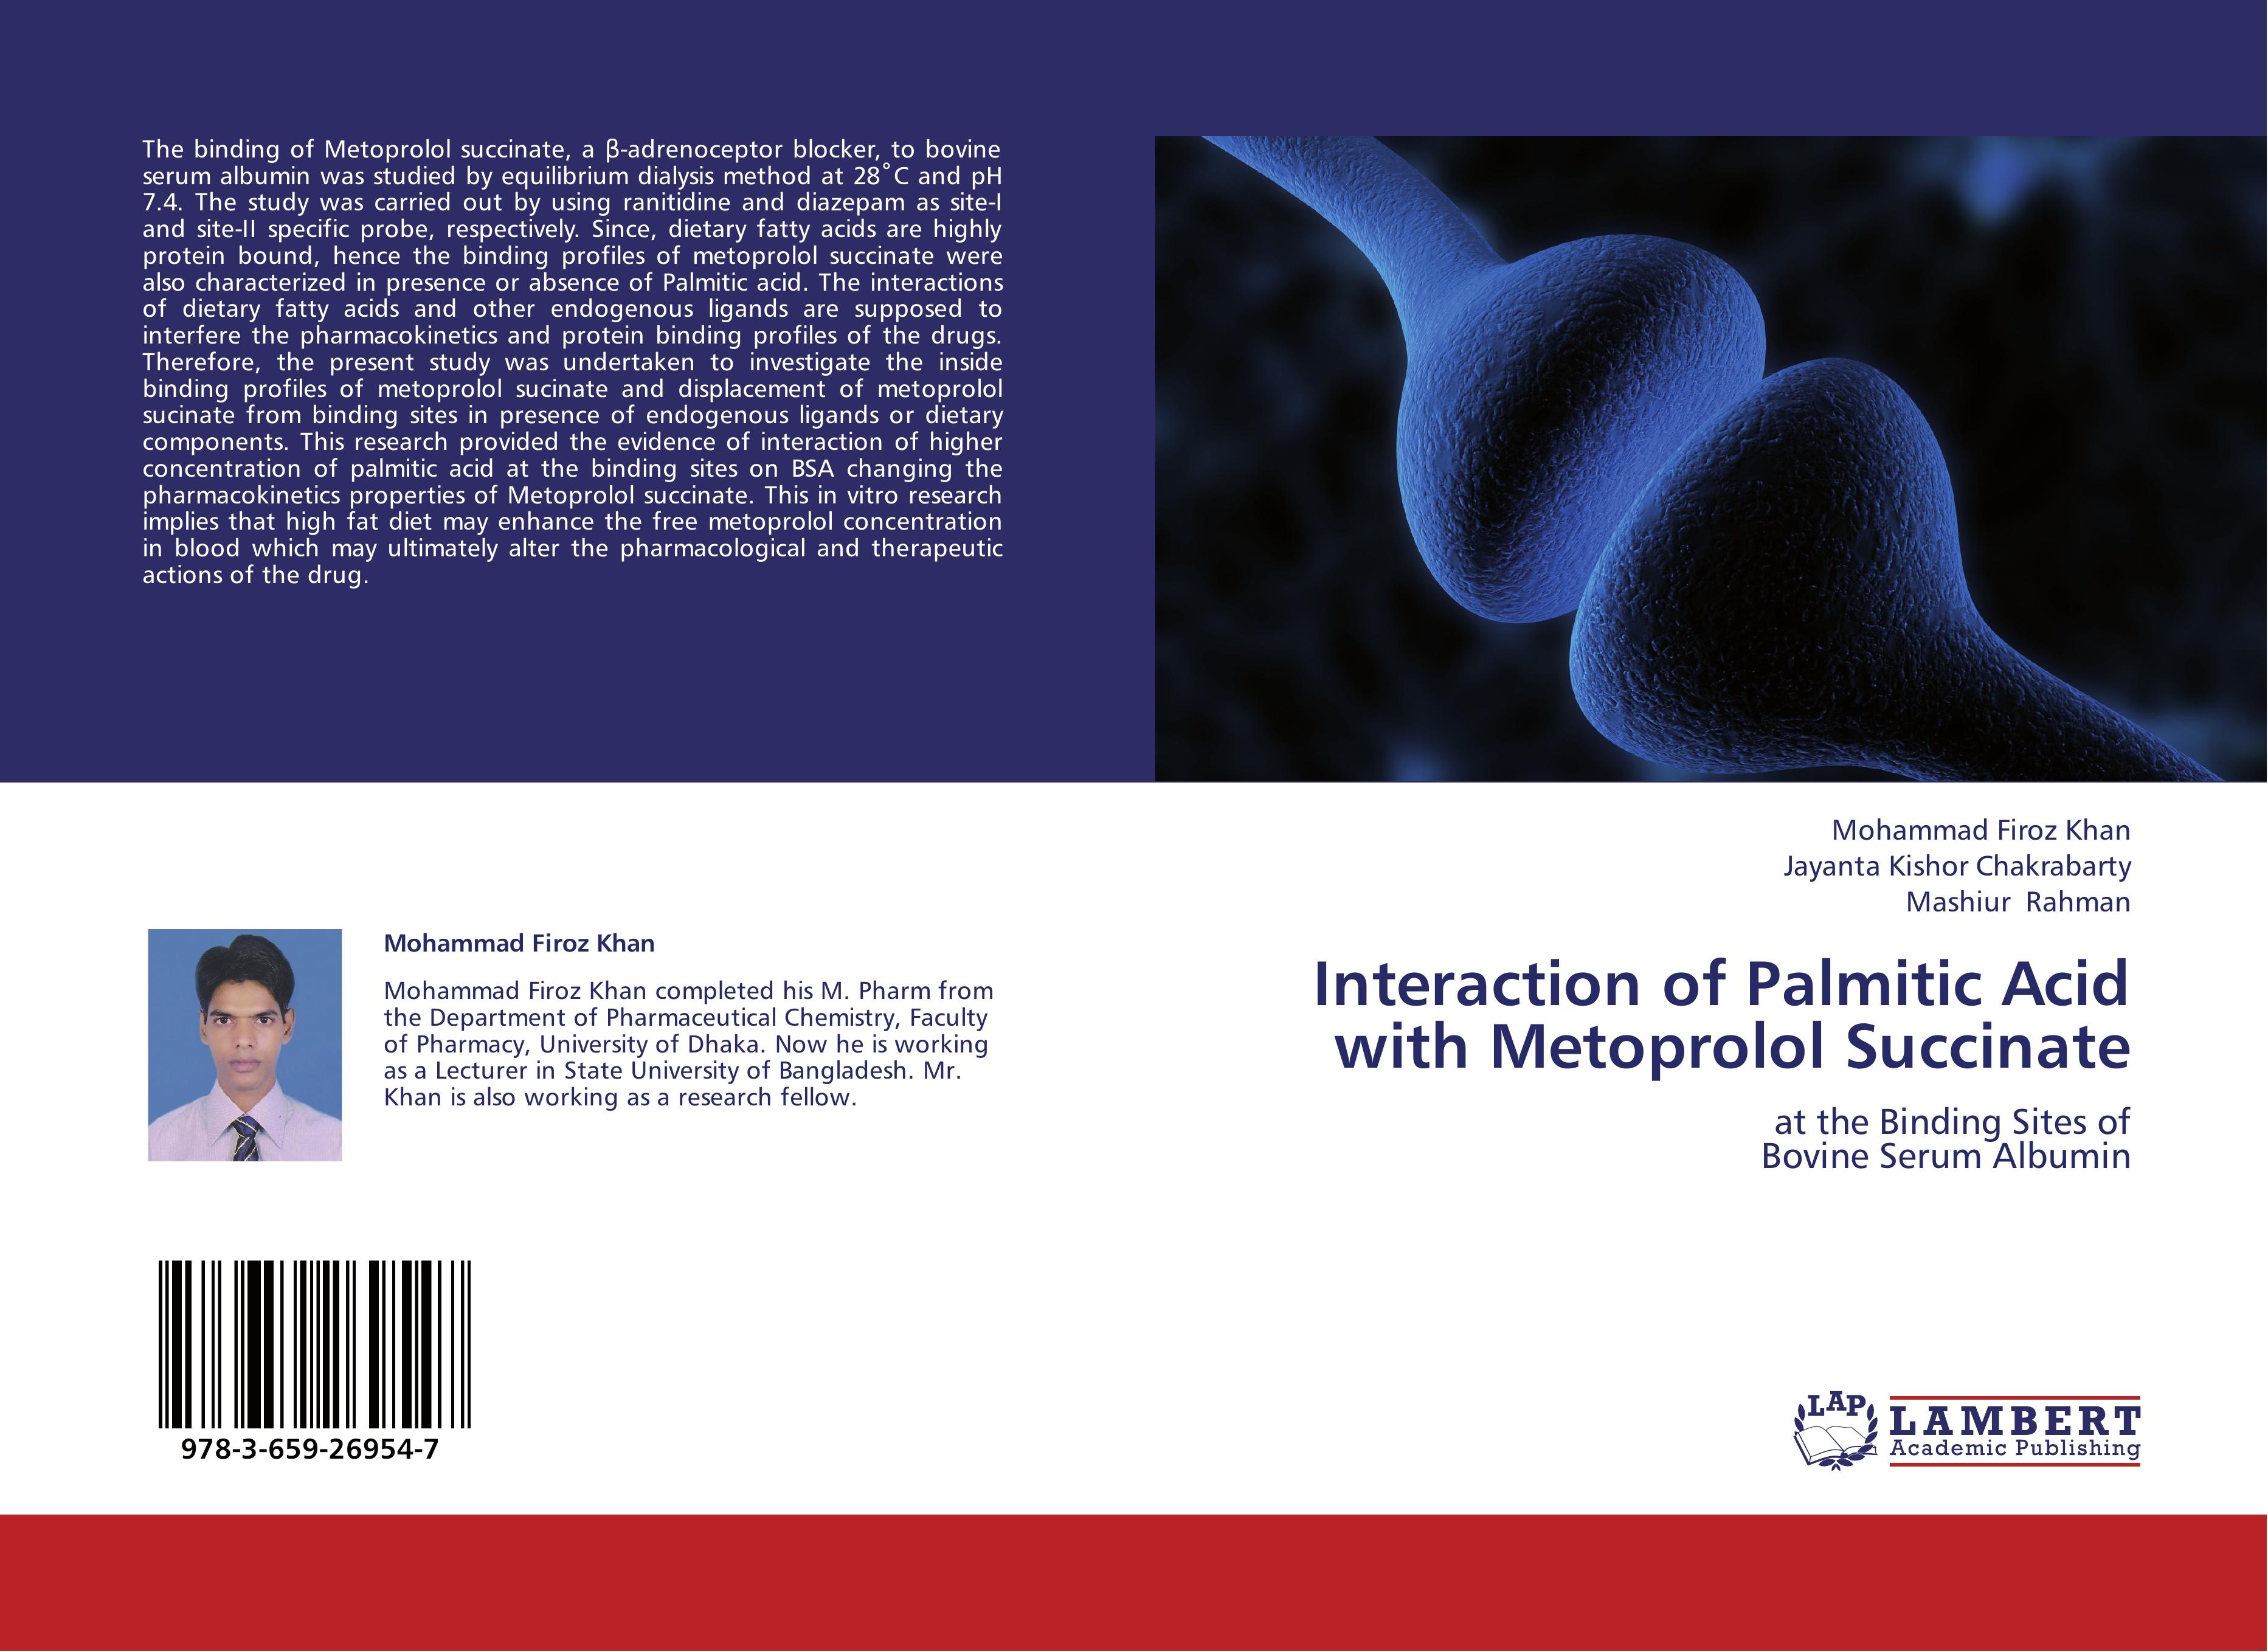 Interaction of Palmitic Acid with Metoprolol Succinate - Mohammad Firoz Khan|Jayanta Kishor chakrabarty|Mashiur Rahman